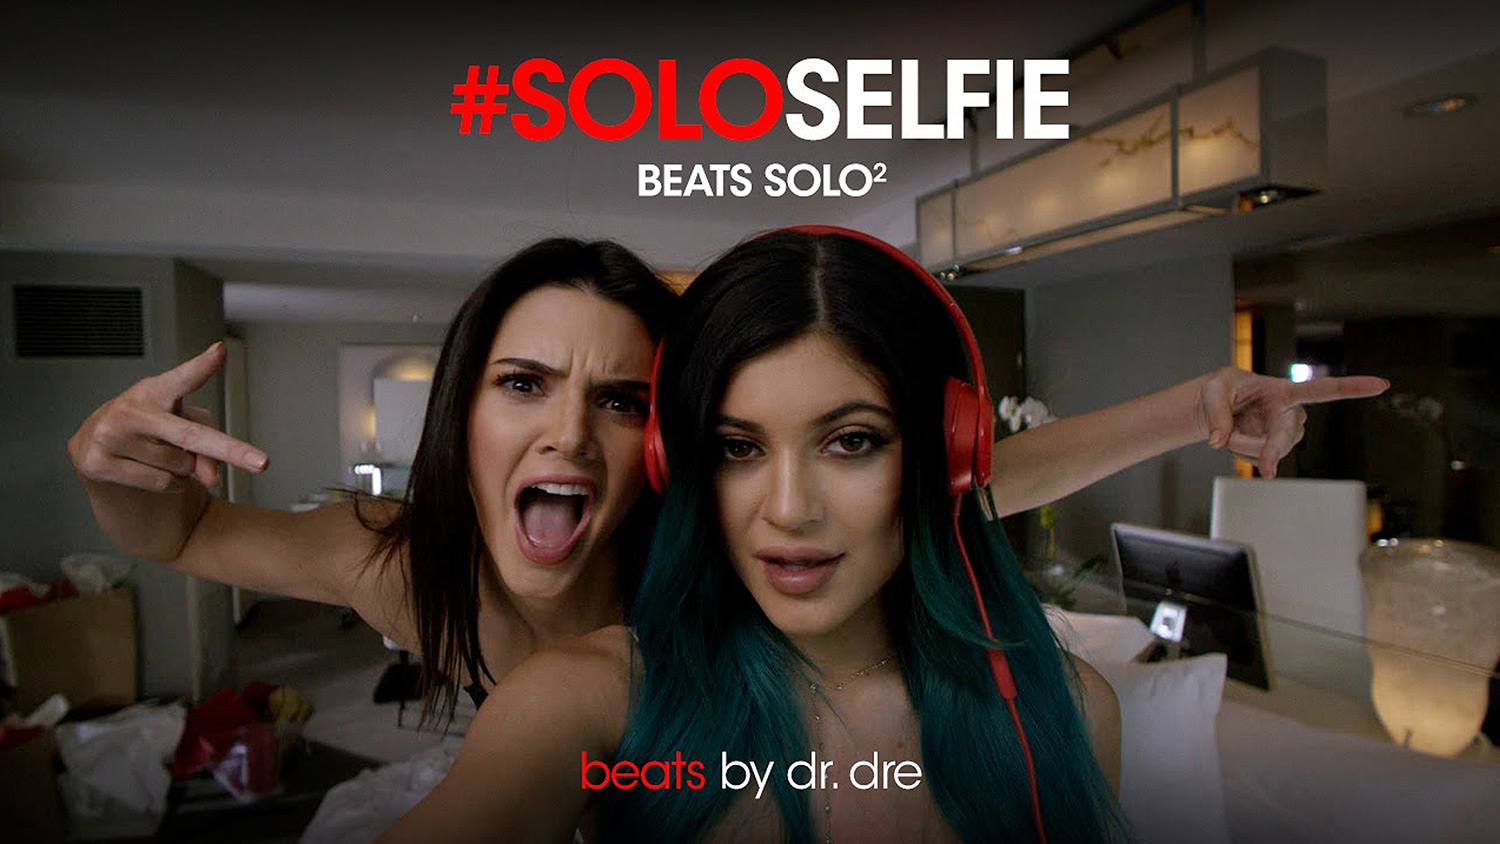 The Beats Solo2 headphone